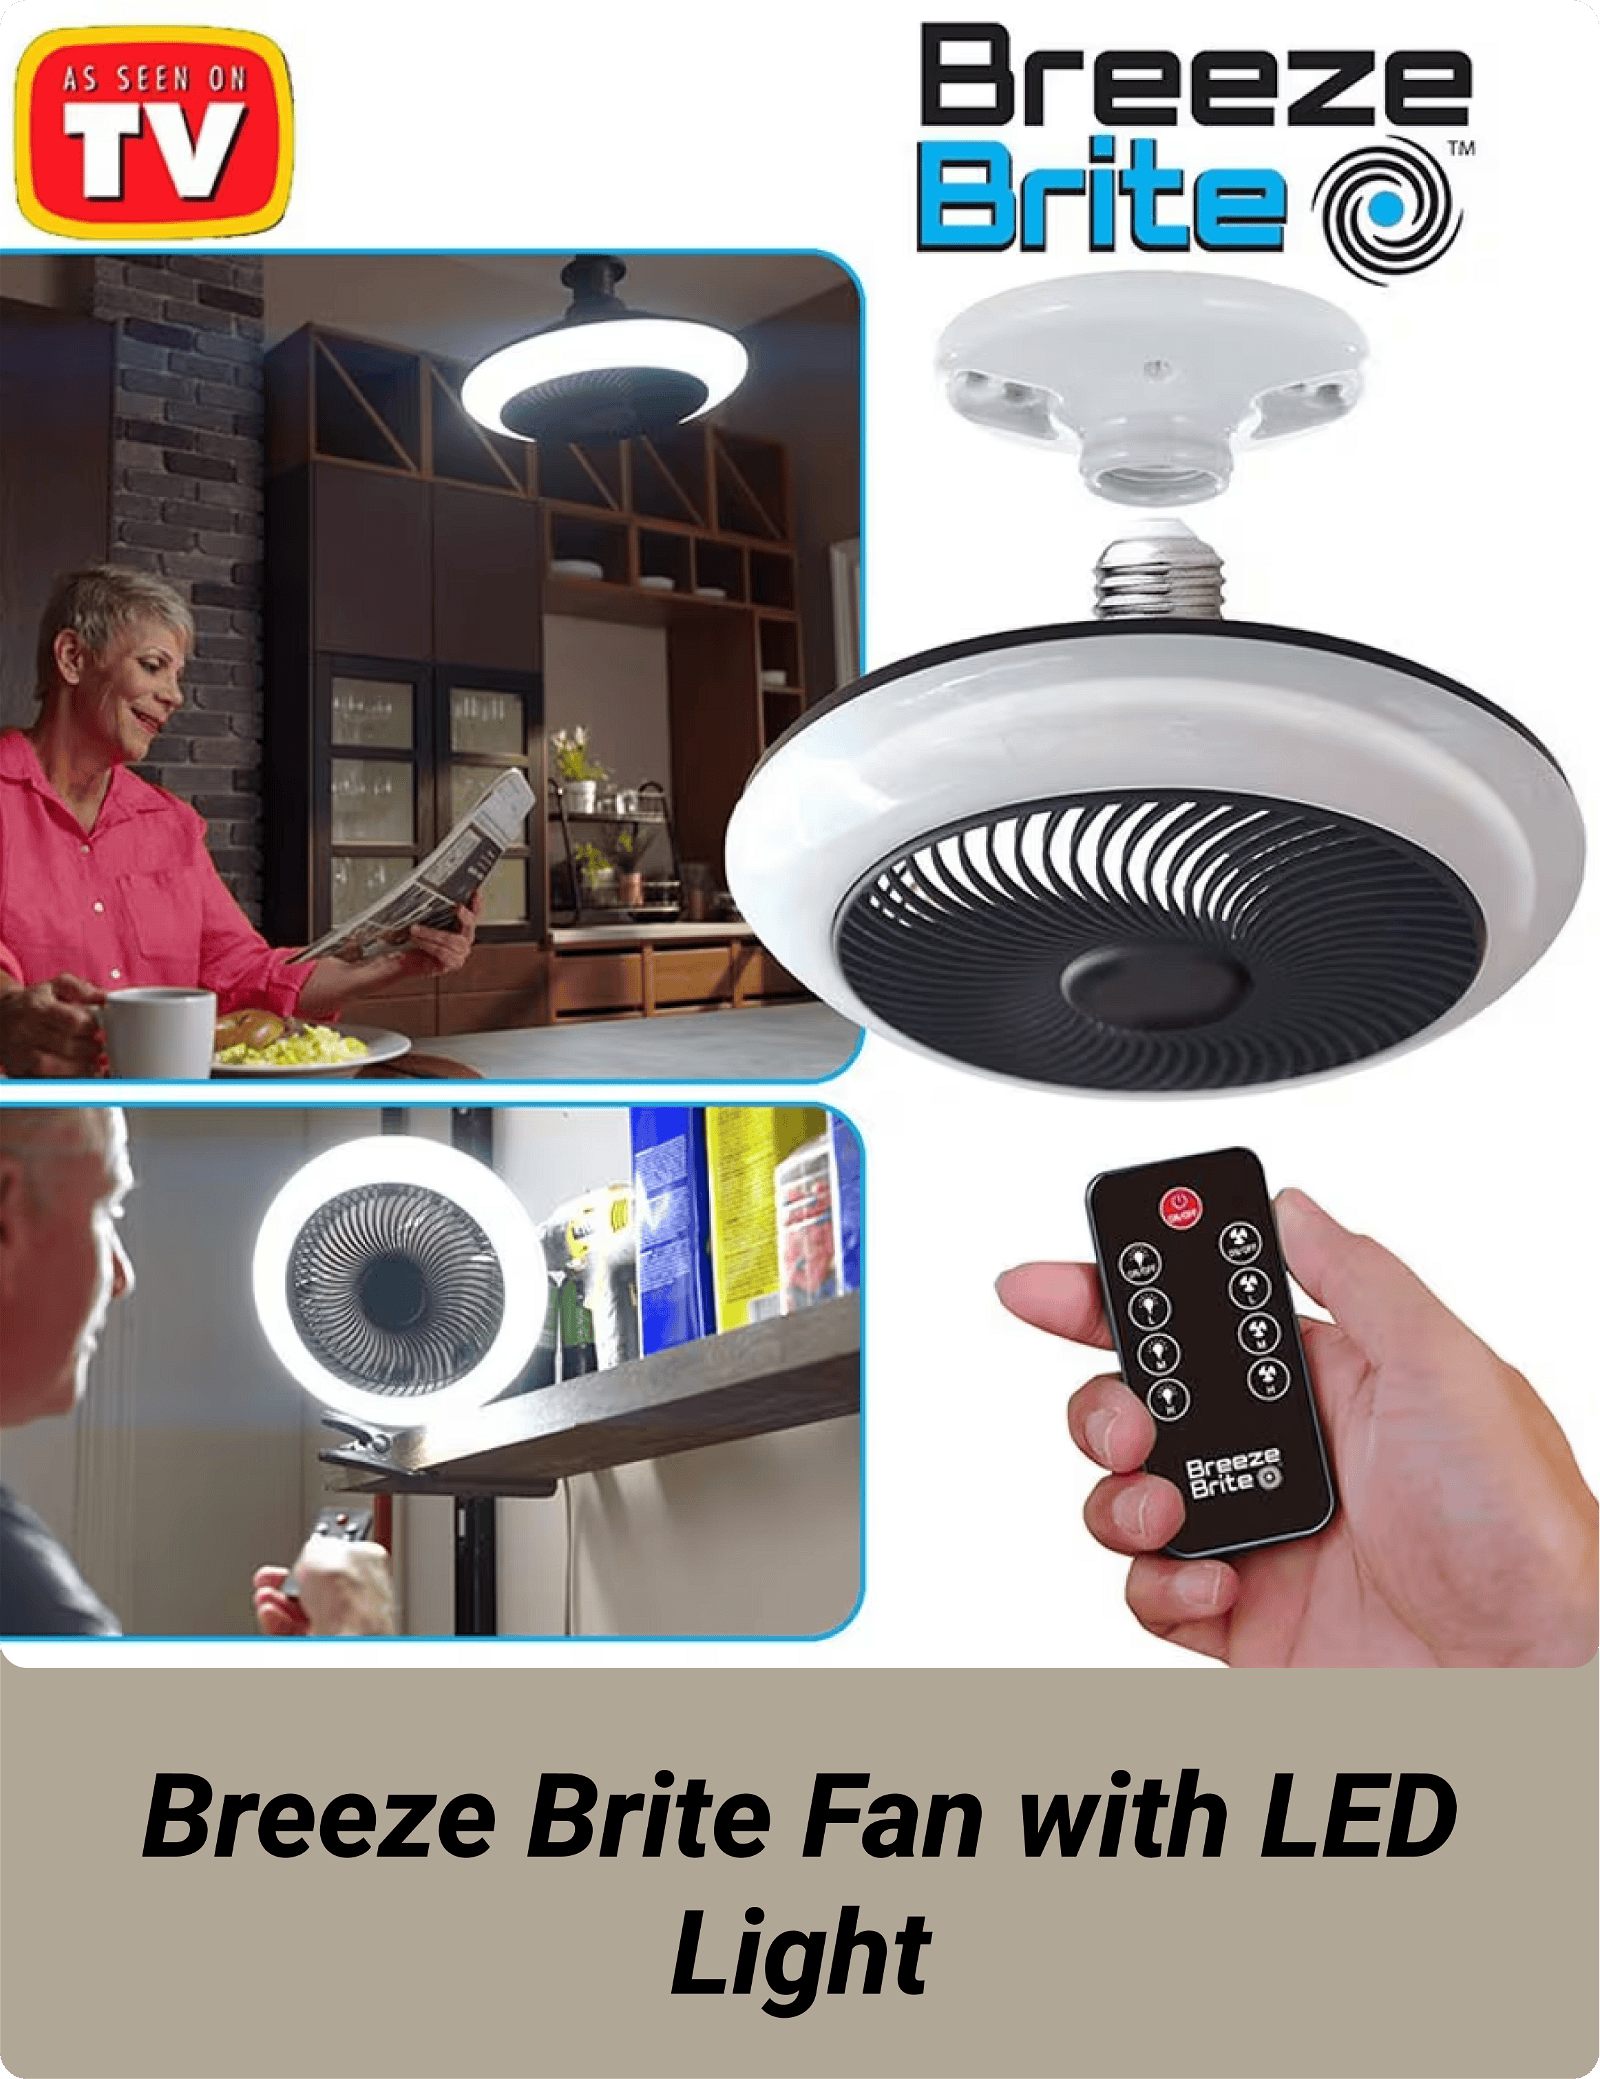 Breeze Brite Fan with LED Light